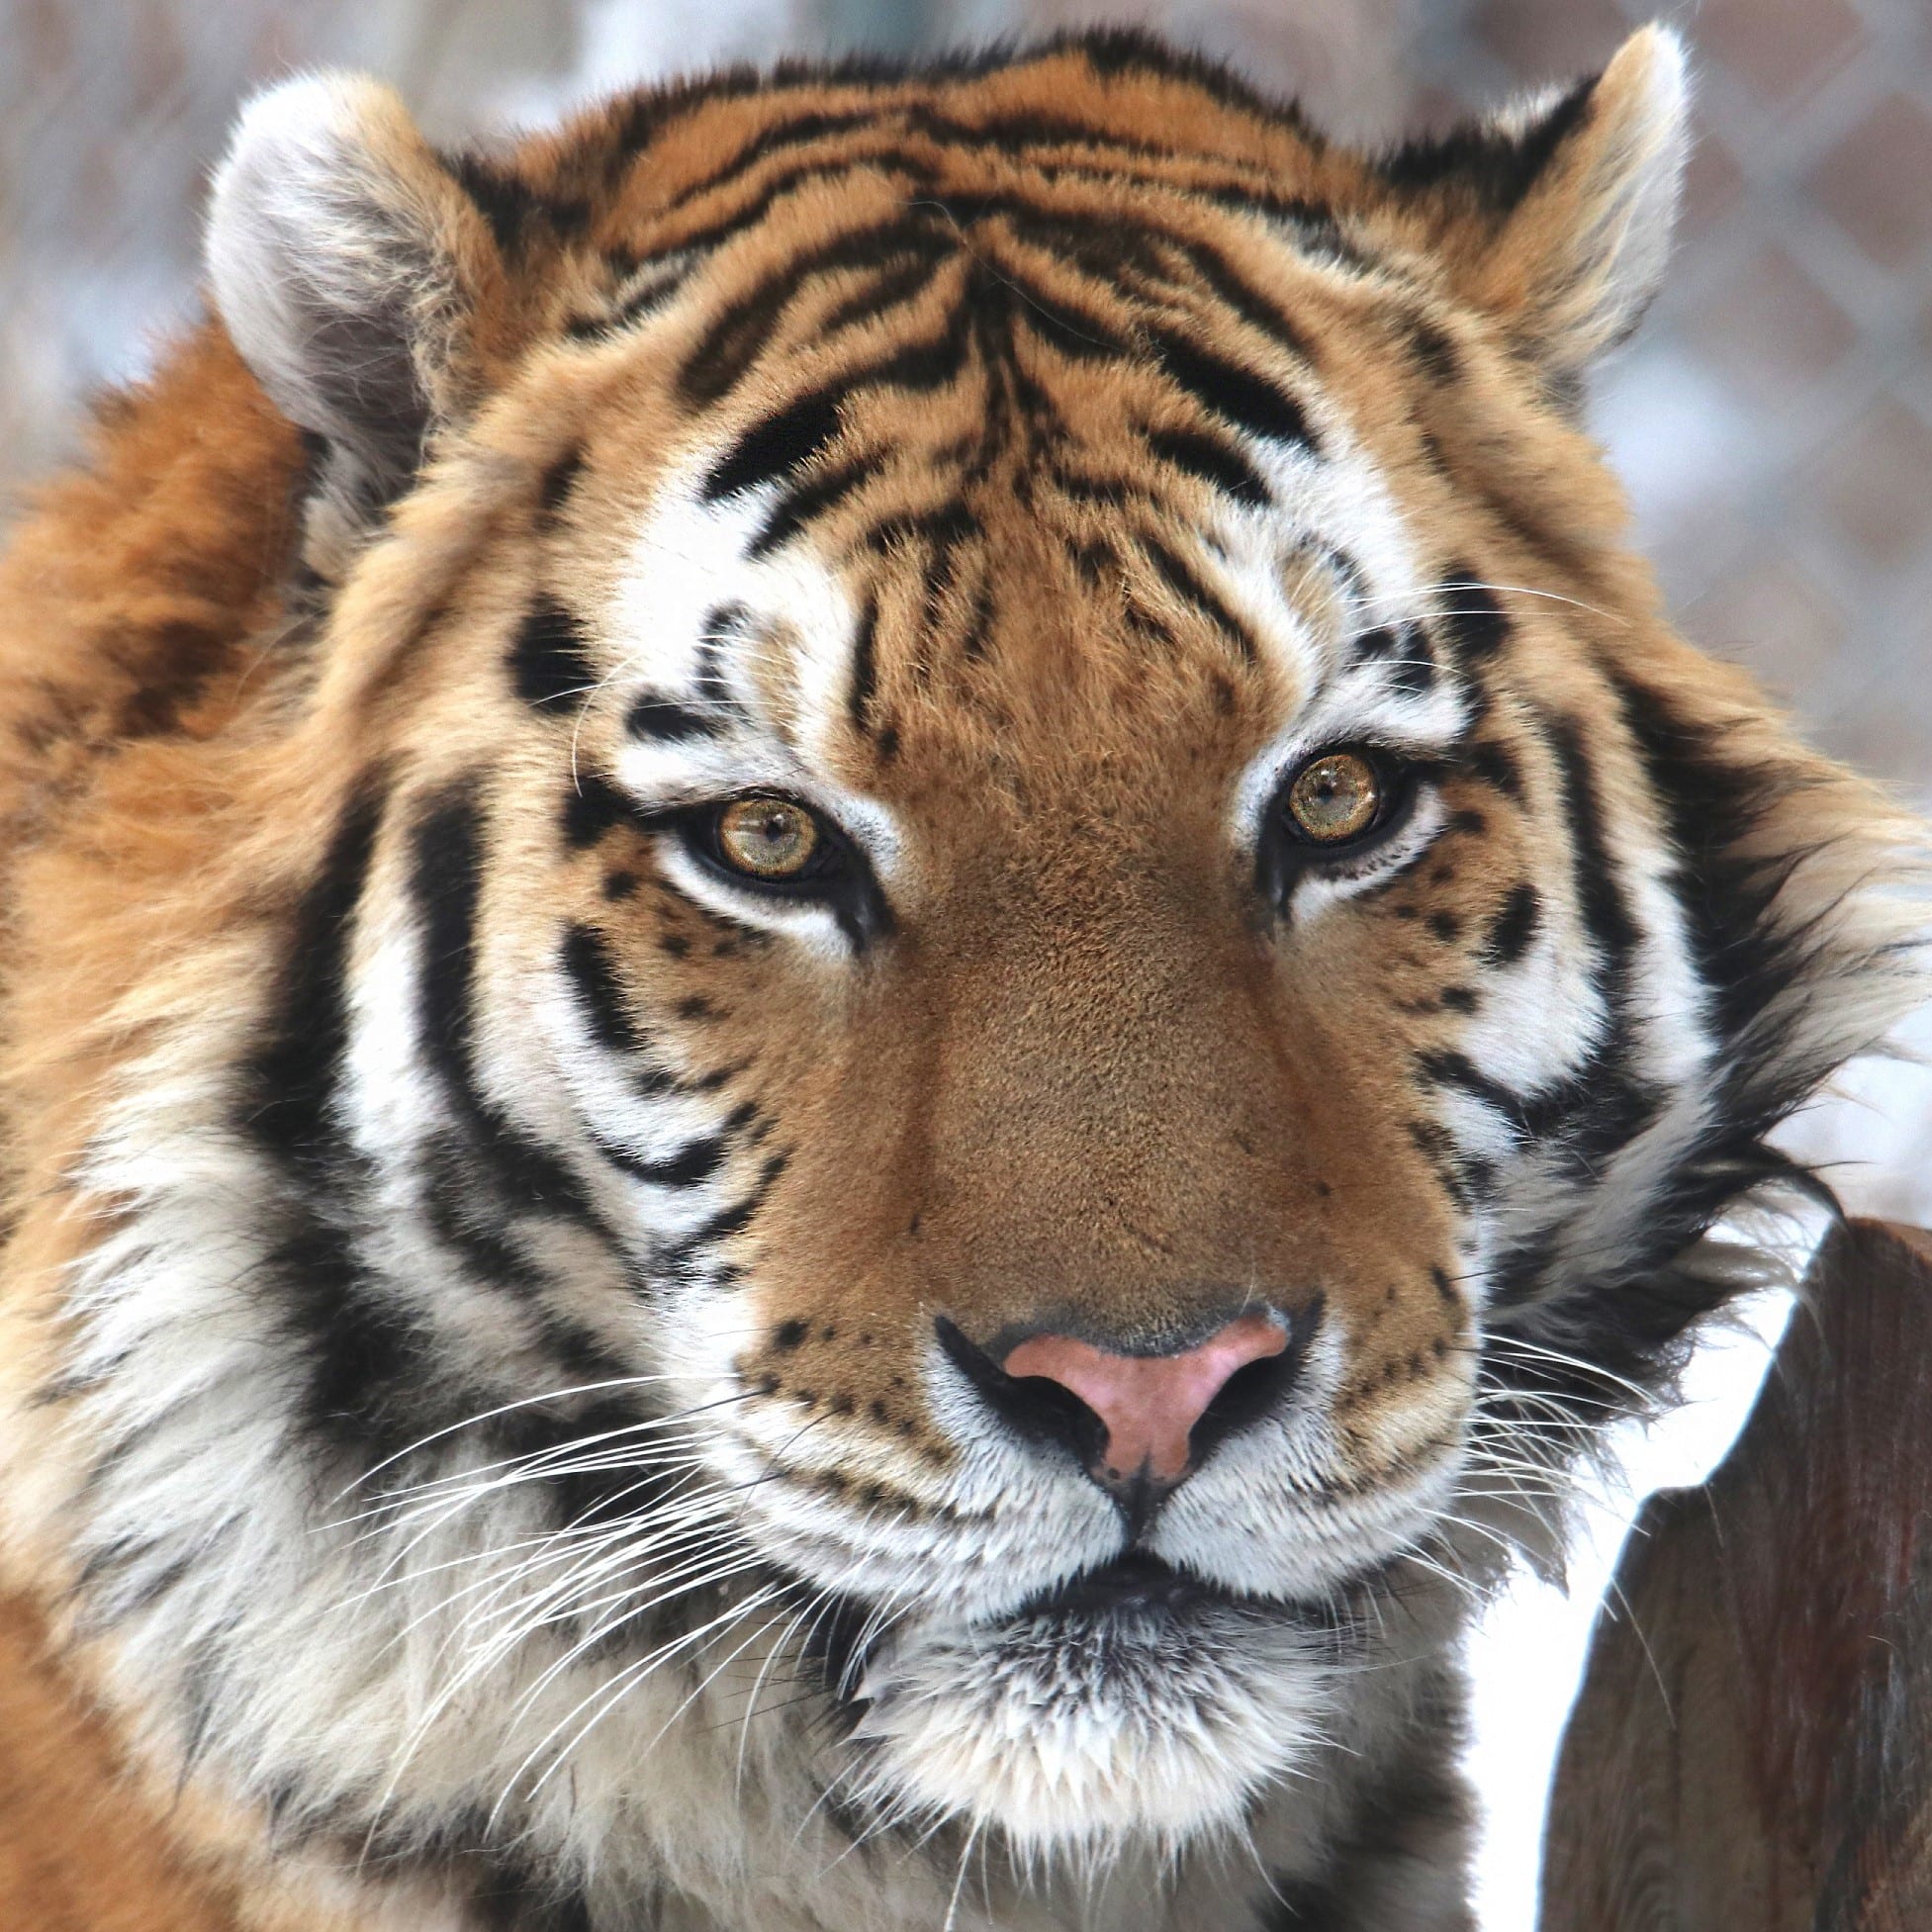 Denver Zoo Welcomes New Amur Tiger Denver Zoo